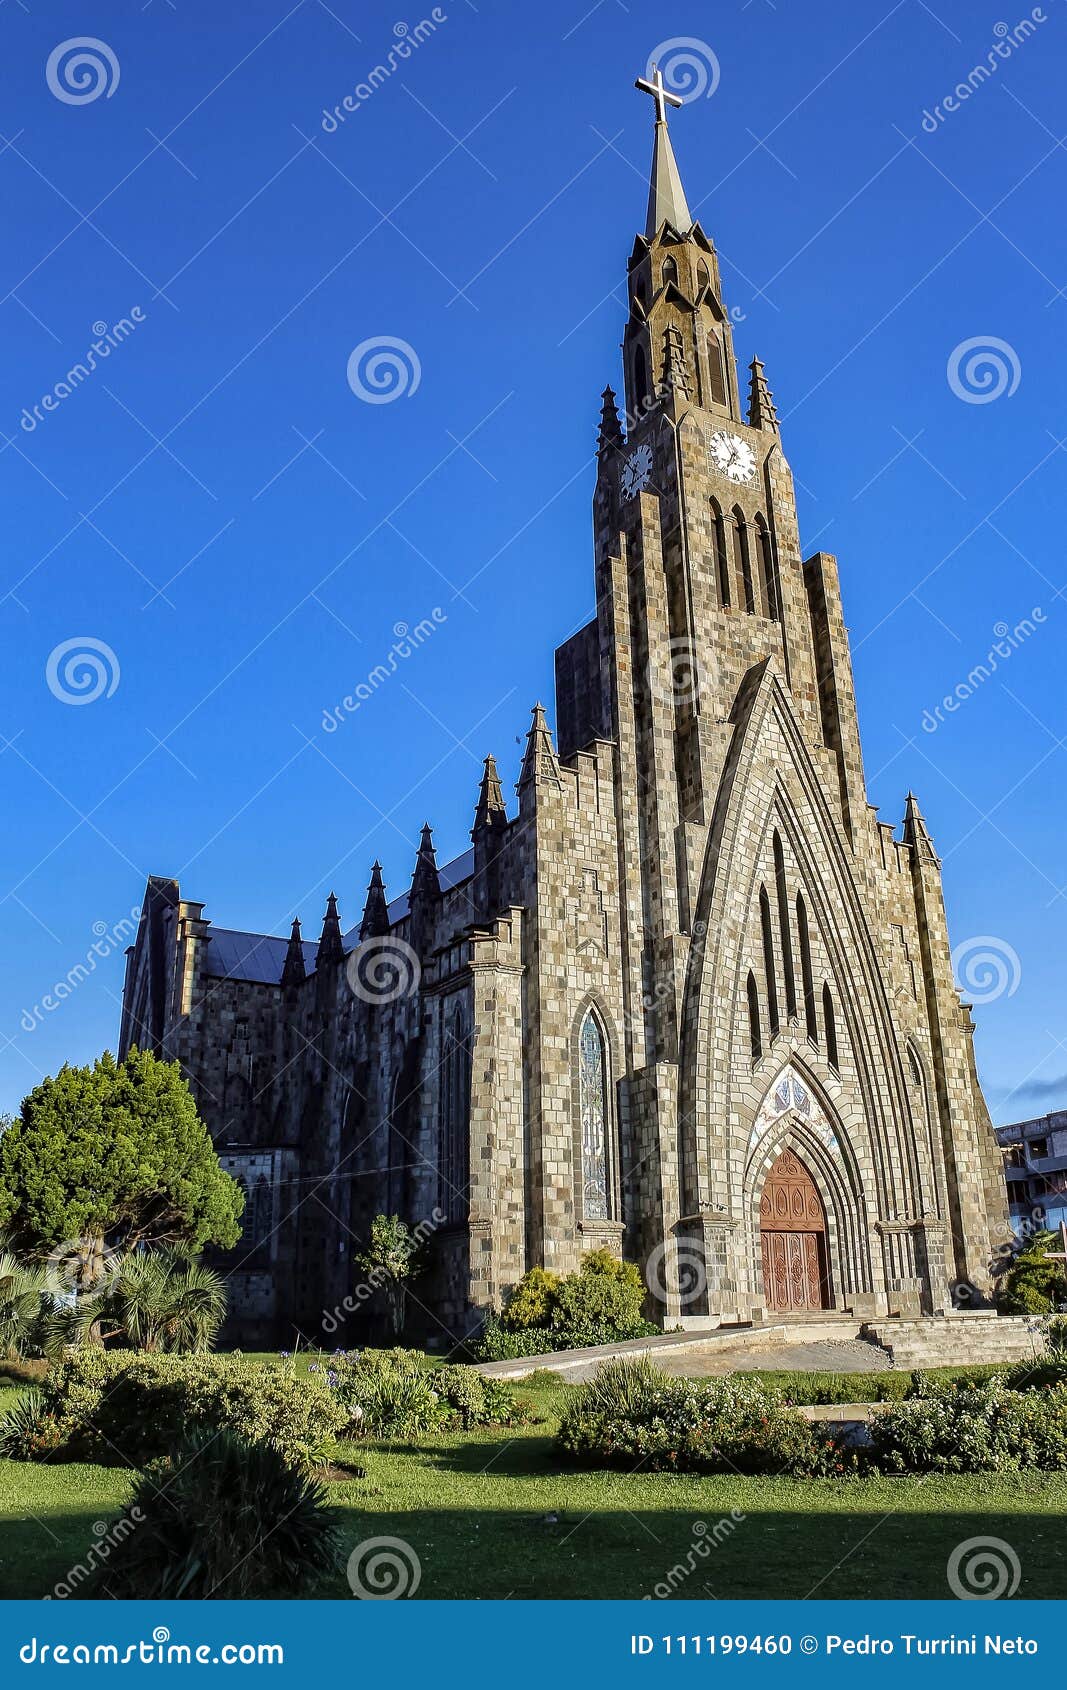 stone cathedral city canela / gramado, rio grande do sul, brazil - church city canela rio grande do sul, brazil